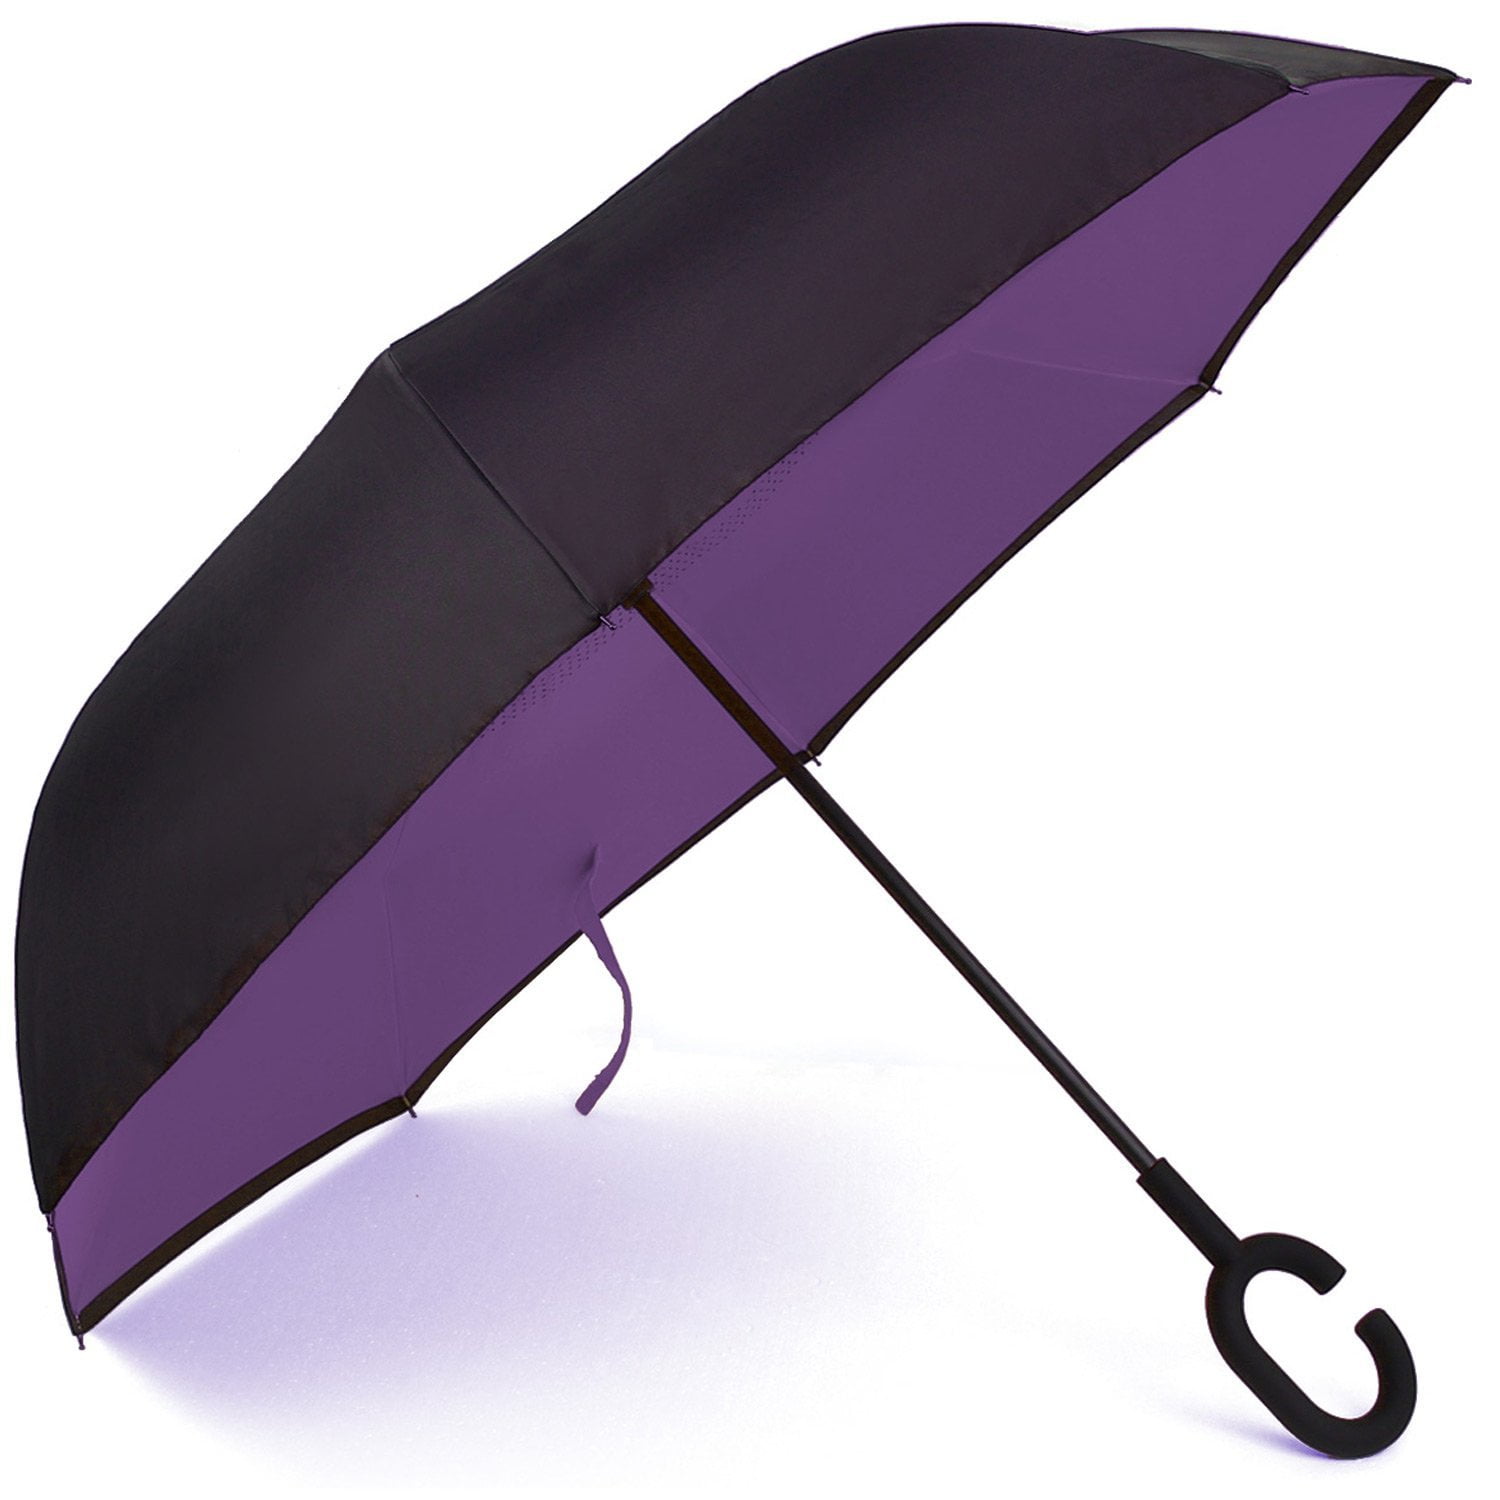 Aweoods Inverted Umbrella Windproof Reverse Folding Double Layer Travel Umbrella 